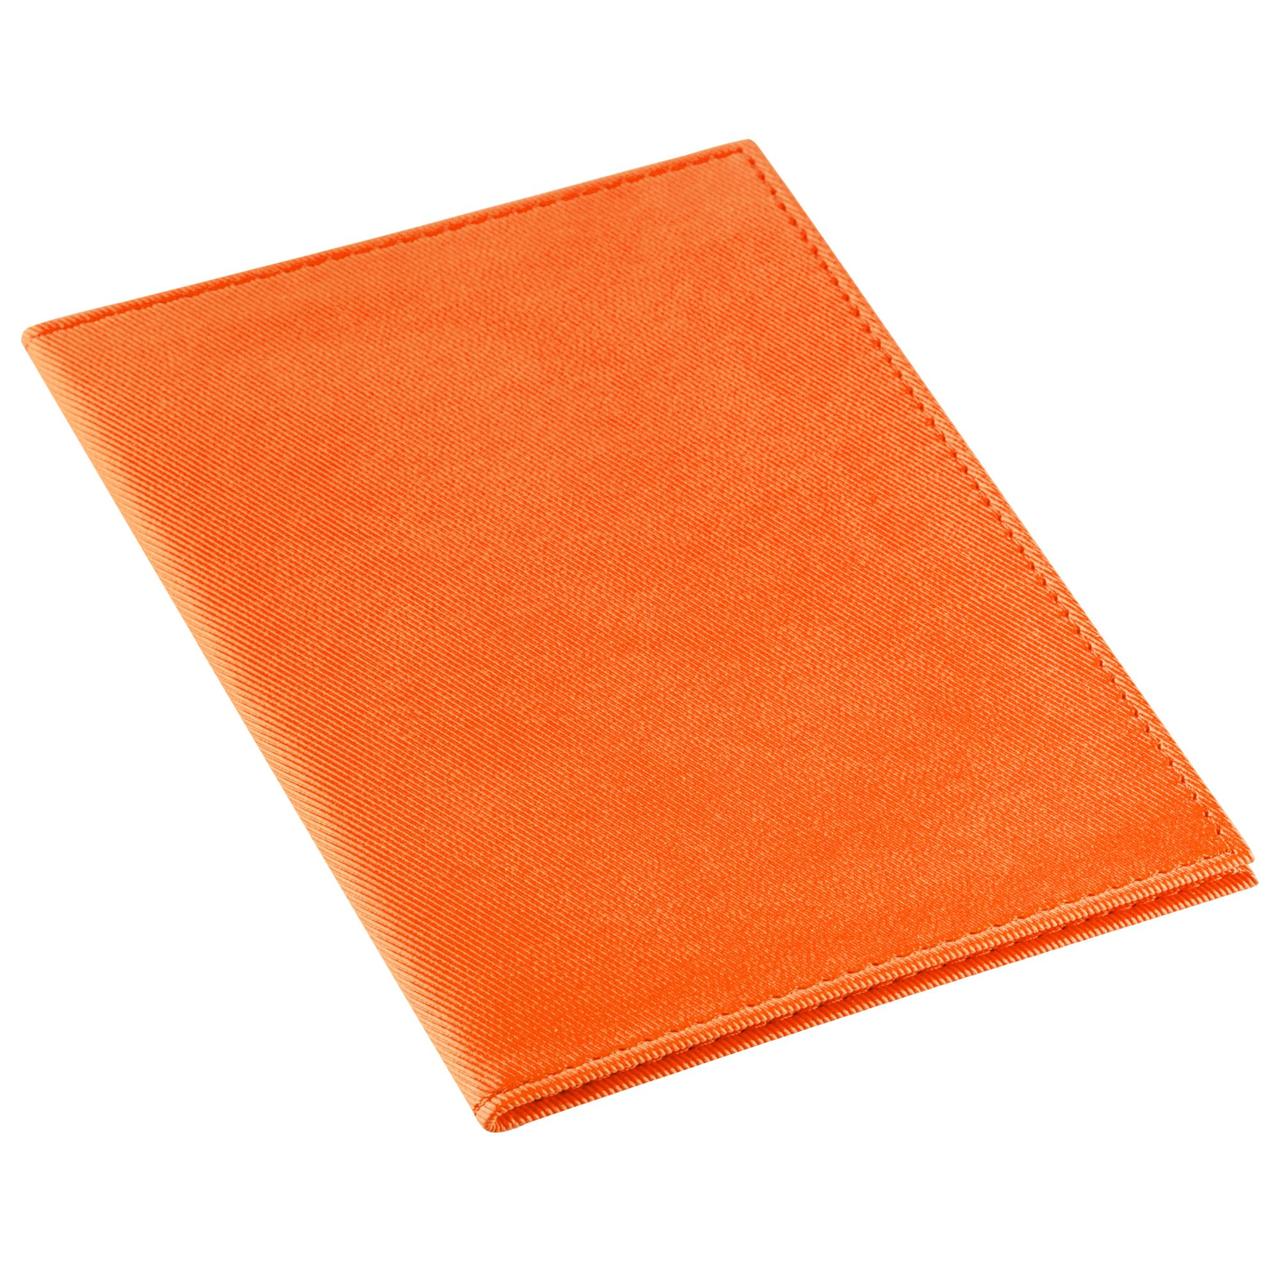 Обложка для паспорта Twill, оранжевая (артикул 6696.20)